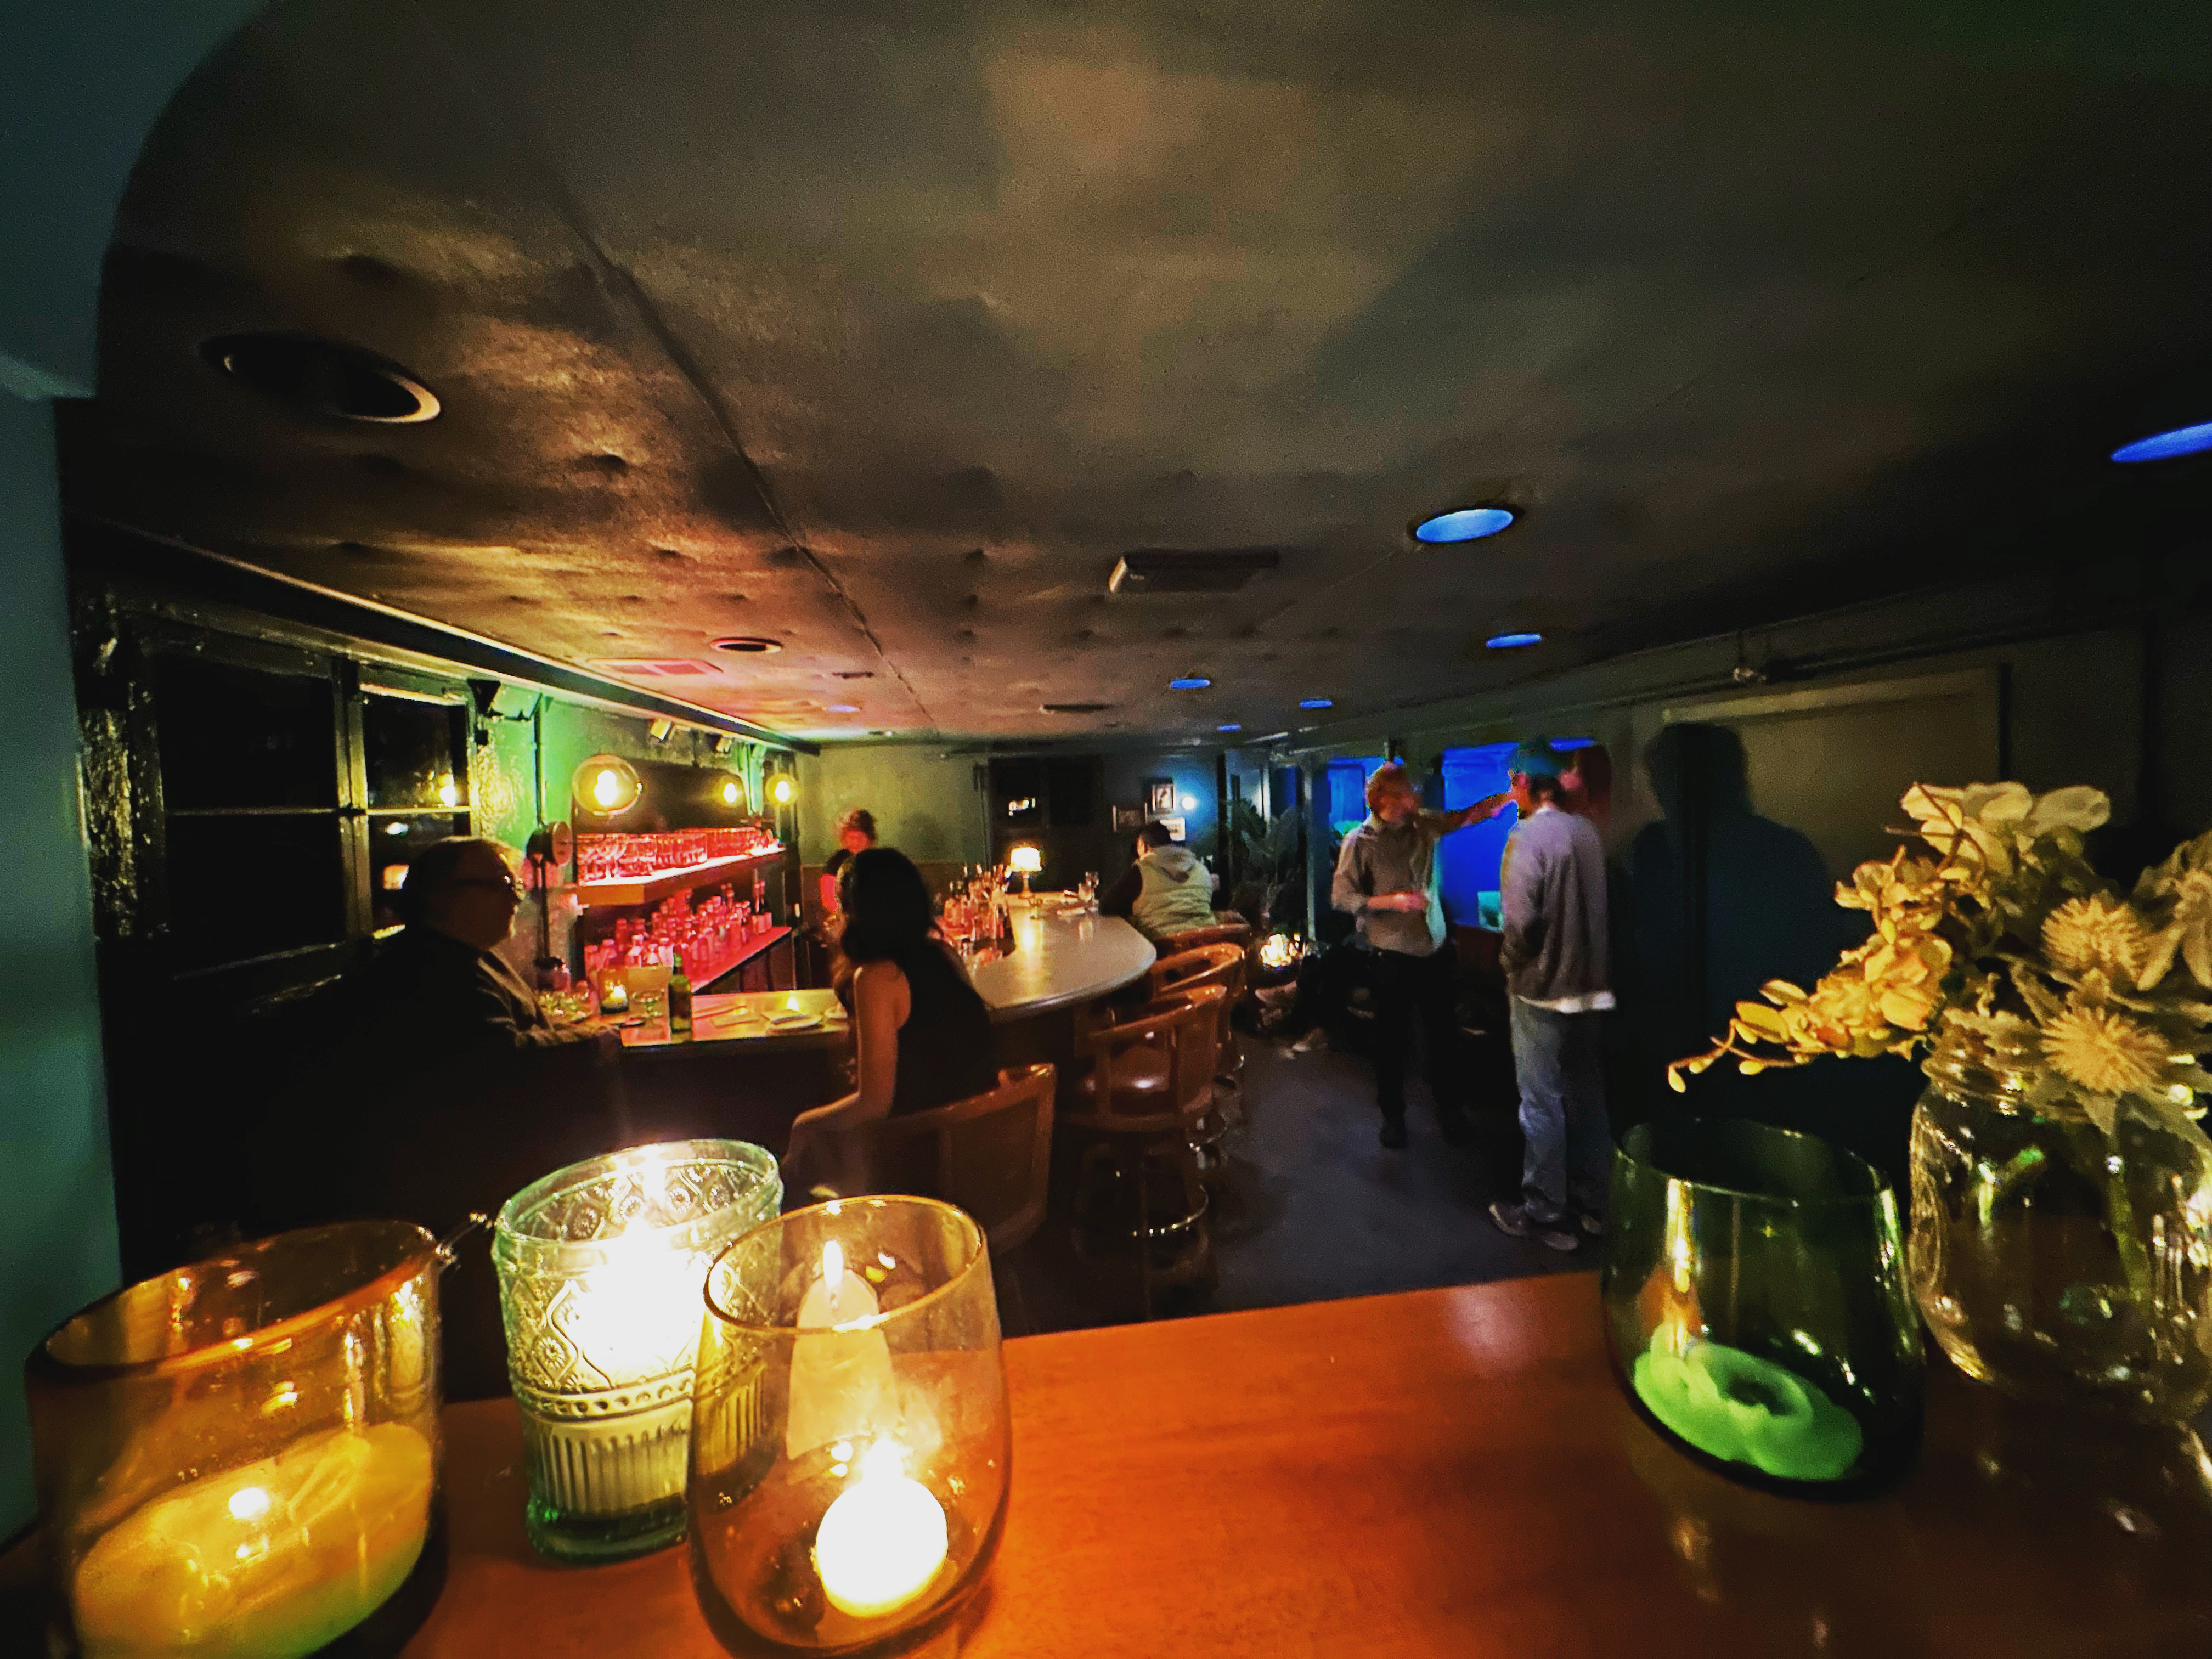 The candlelit interior of Northwest Portland cocktail bar Grandma’s Secret.